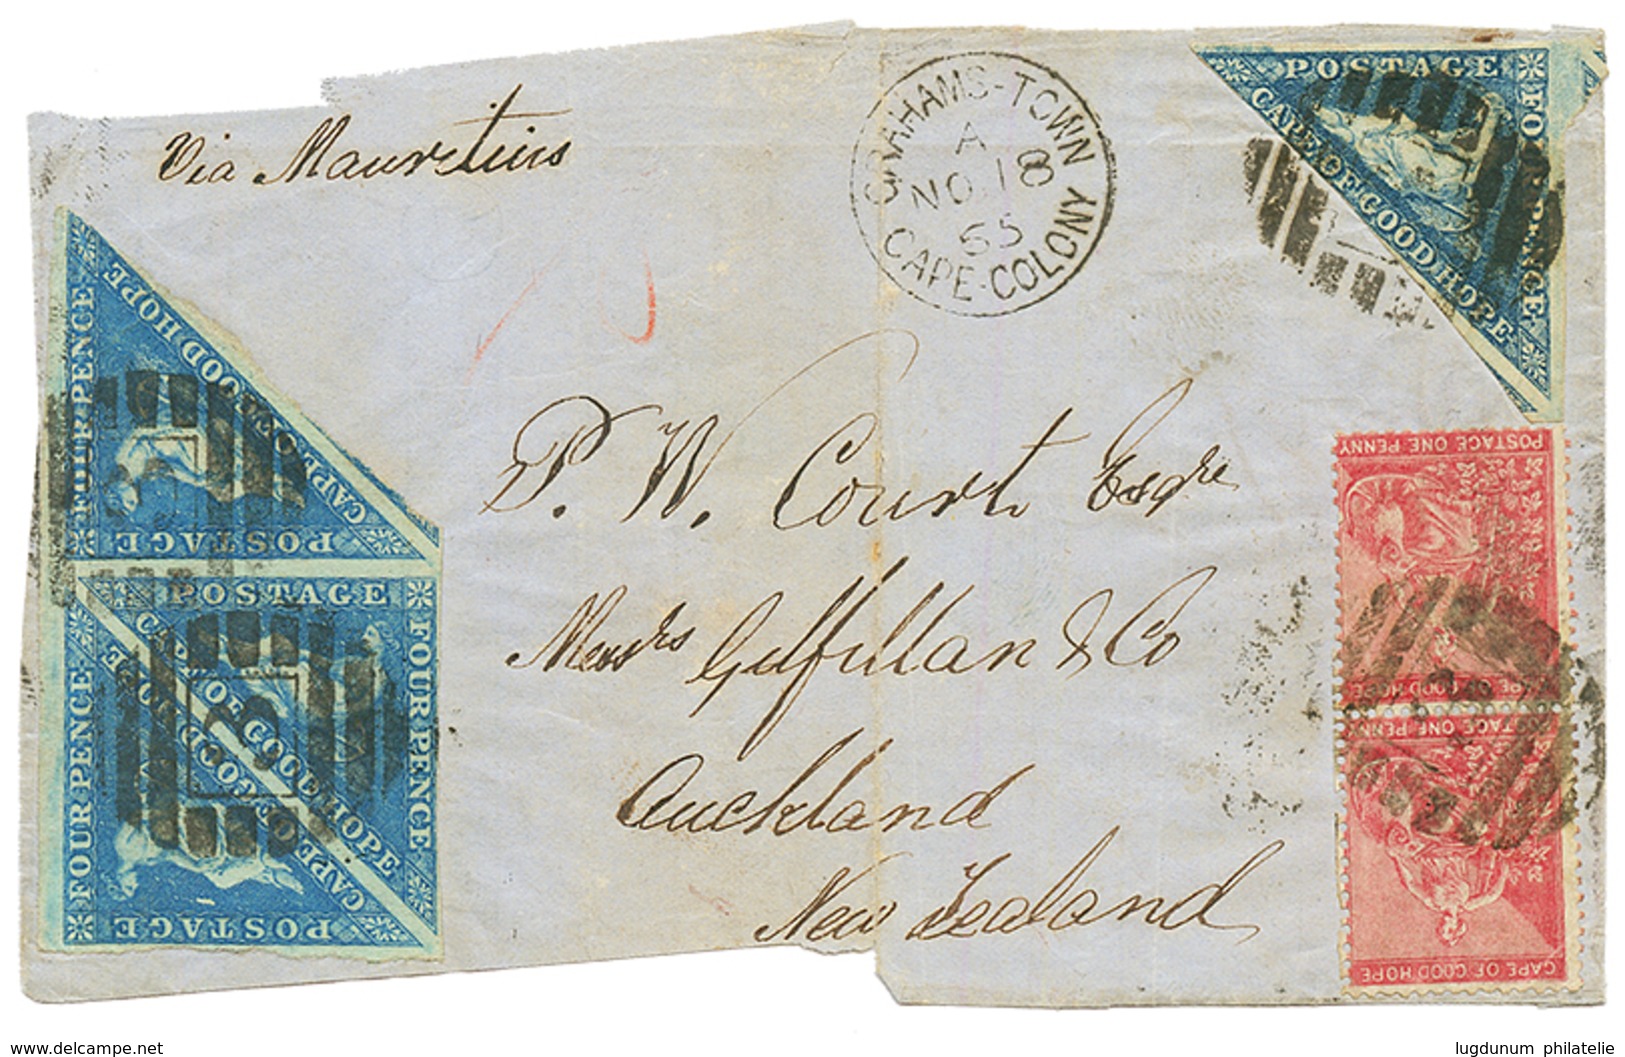 1865 TRiangular 4d (x4) + 1d Red(x2) Canc. 3 + GRAHAMS-TOWN CAPE COLONY On Cover (FRONT Only) Via "MAURITIUS" To AUCKLAN - Cap De Bonne Espérance (1853-1904)